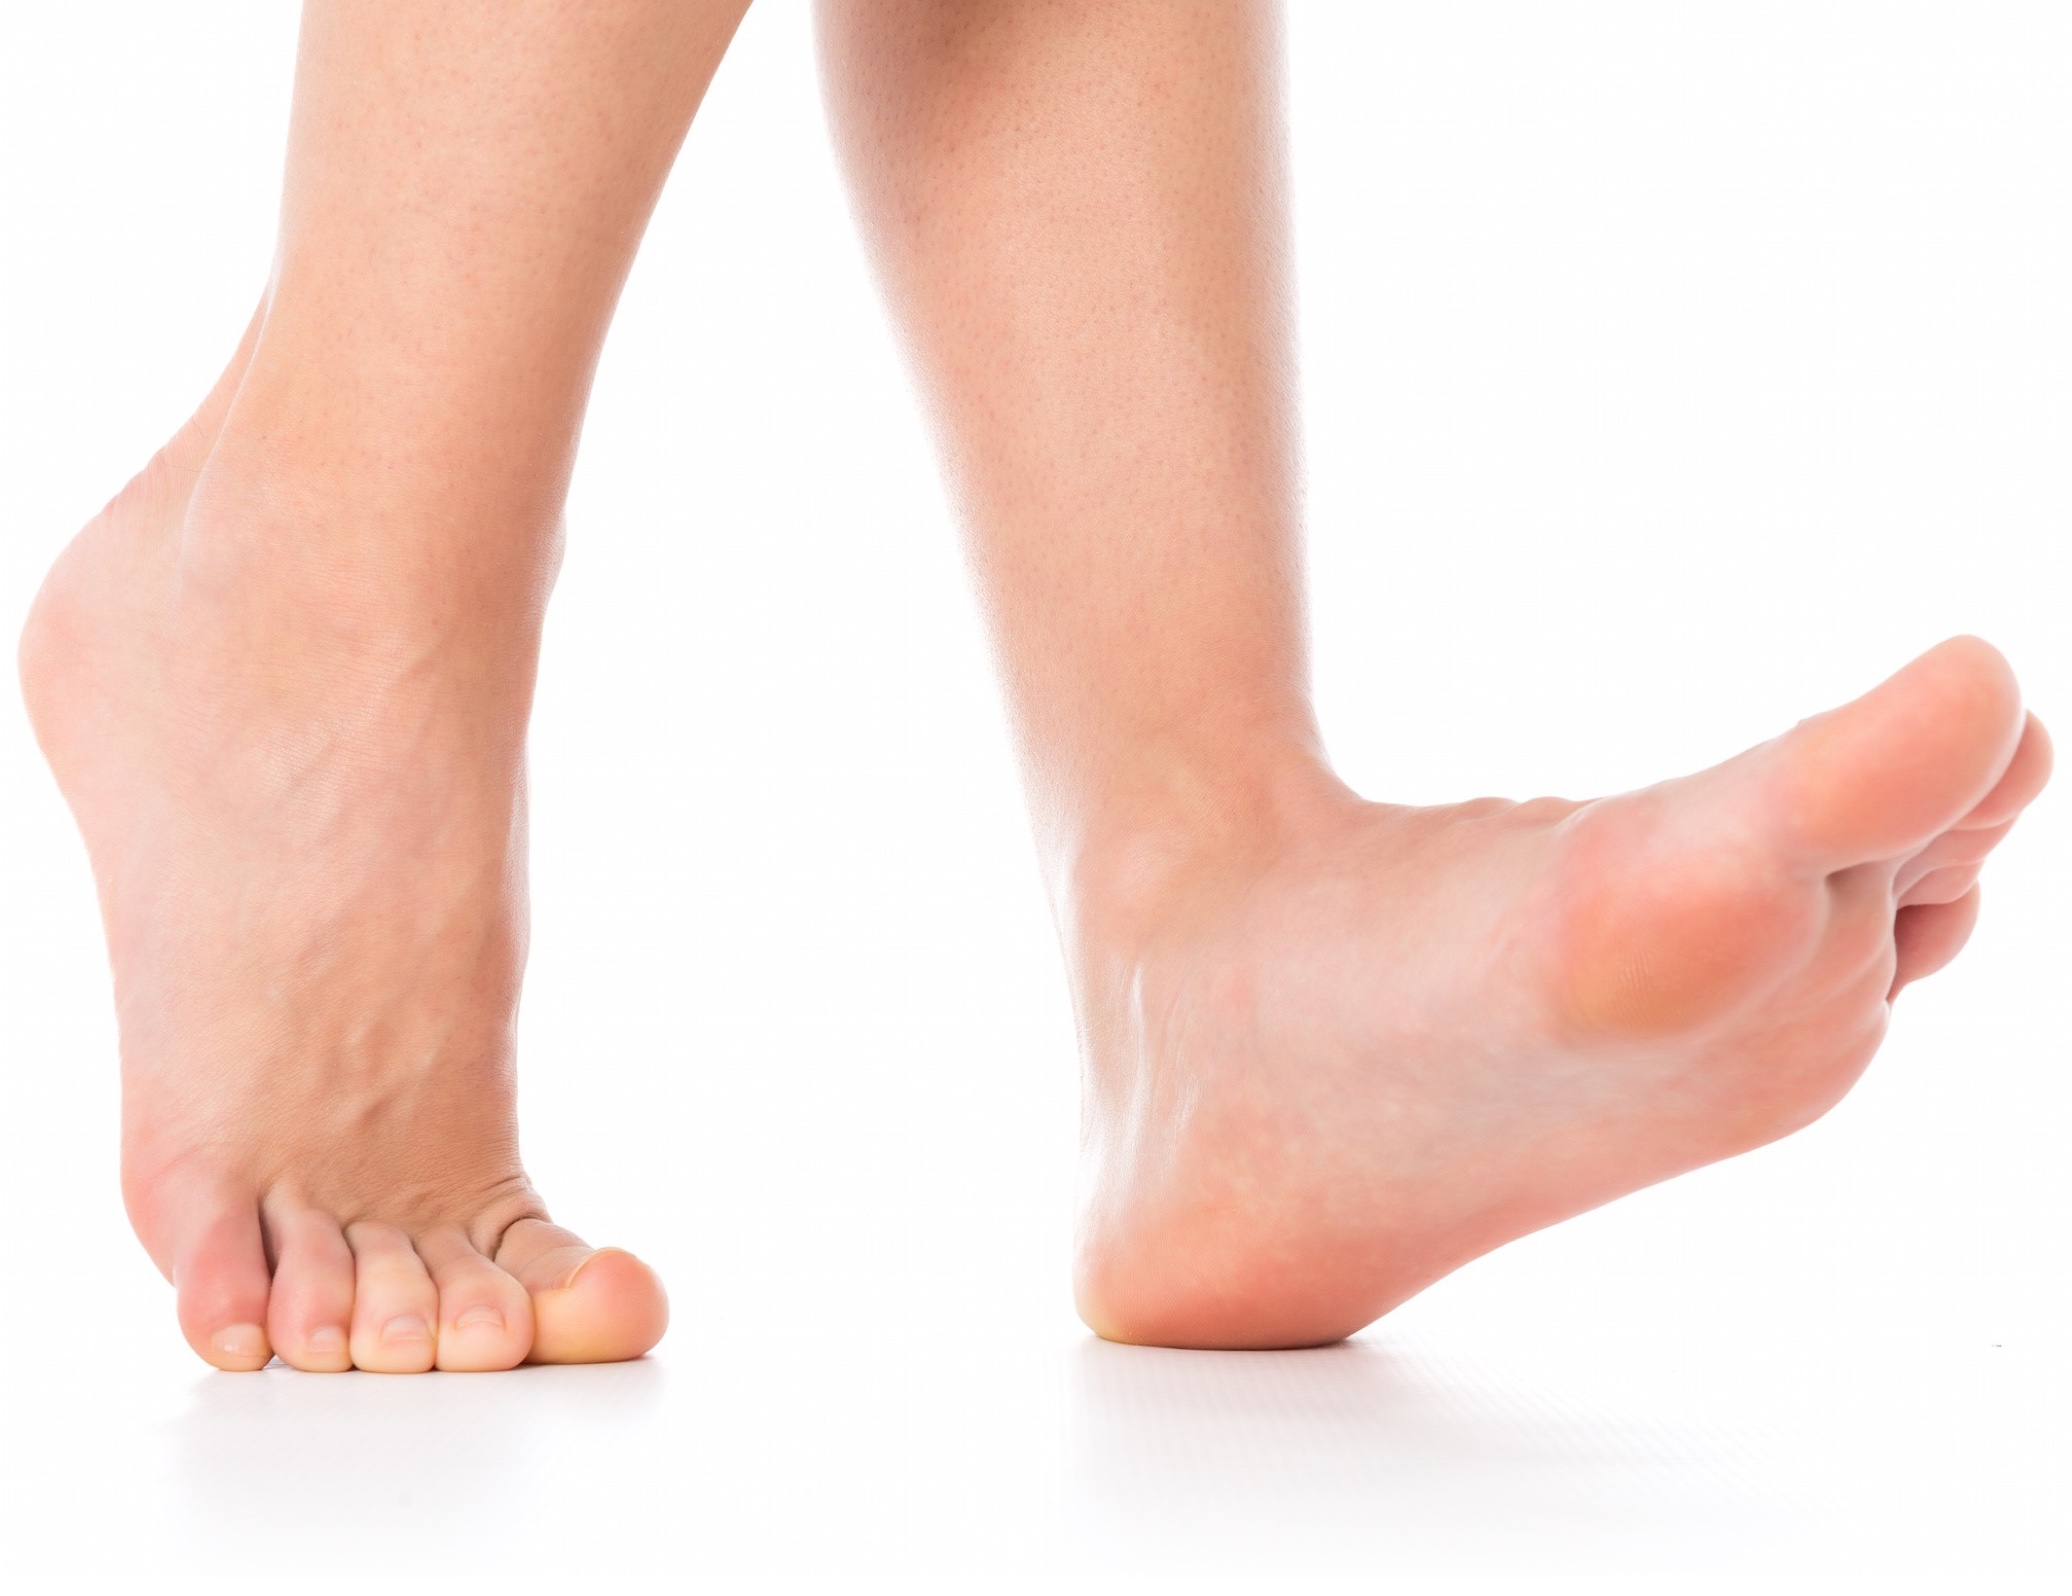 Arterele blocate pot duce la aparitia durerii in picior atunci cand mergi | cooperativadaciaunita.ro